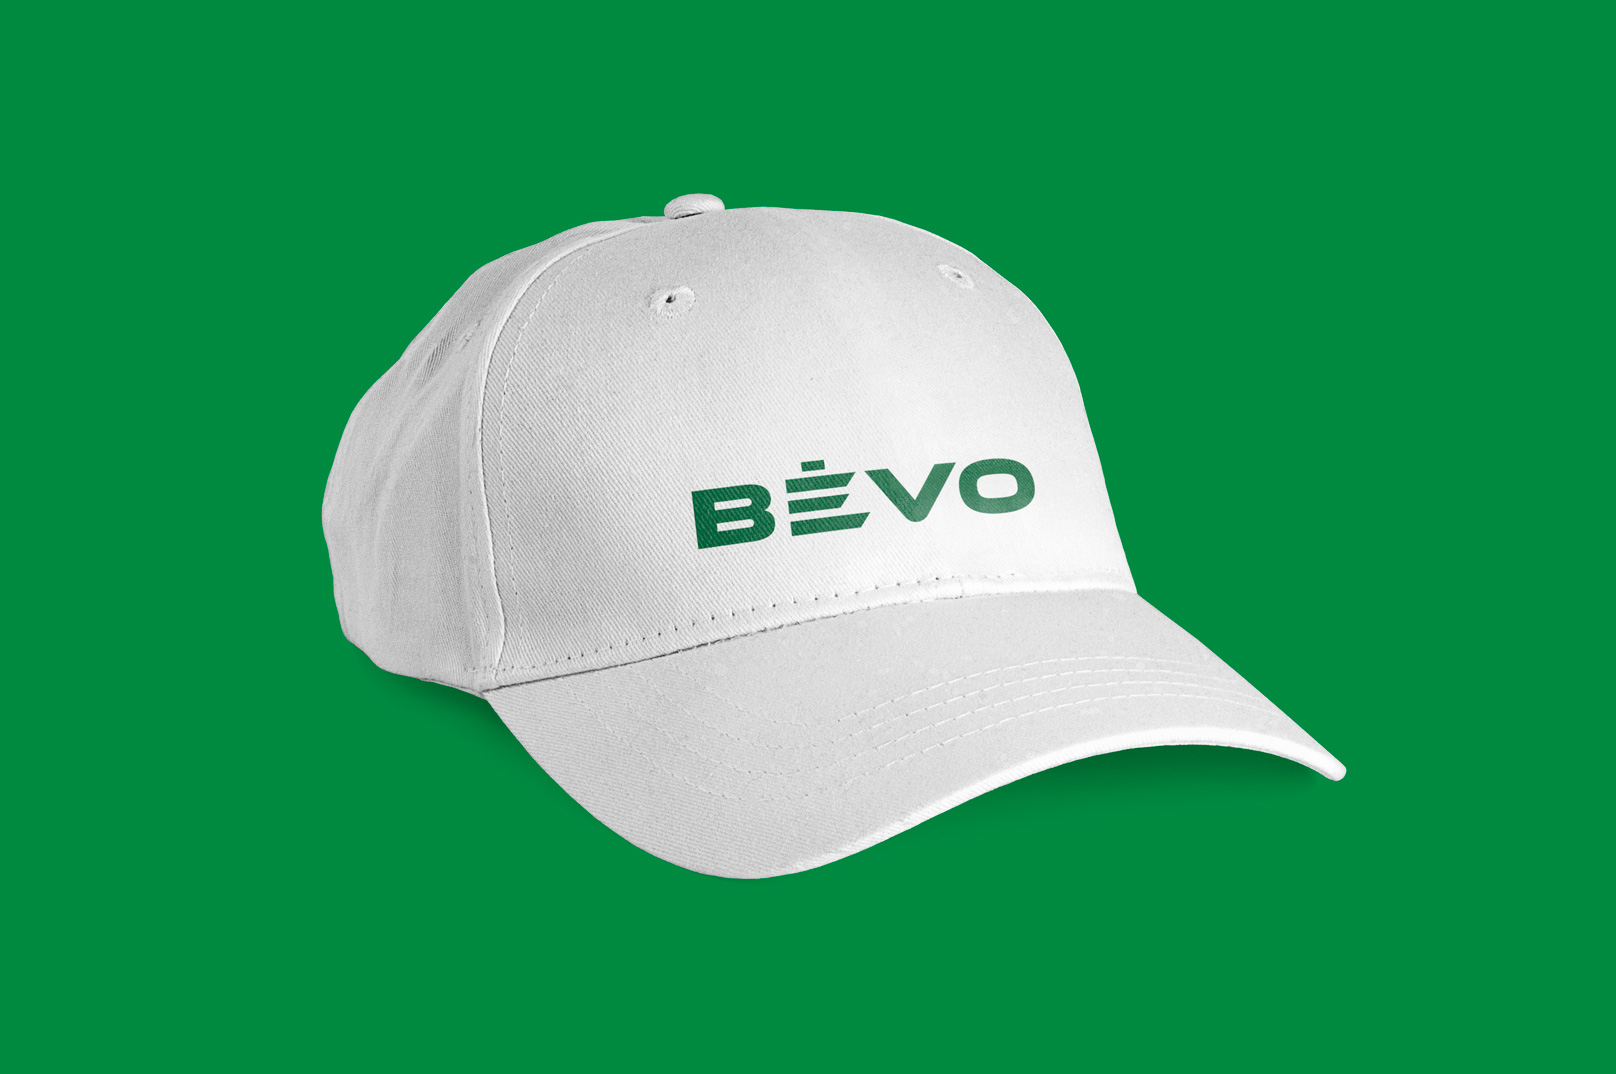 Bevo identity on ball cap